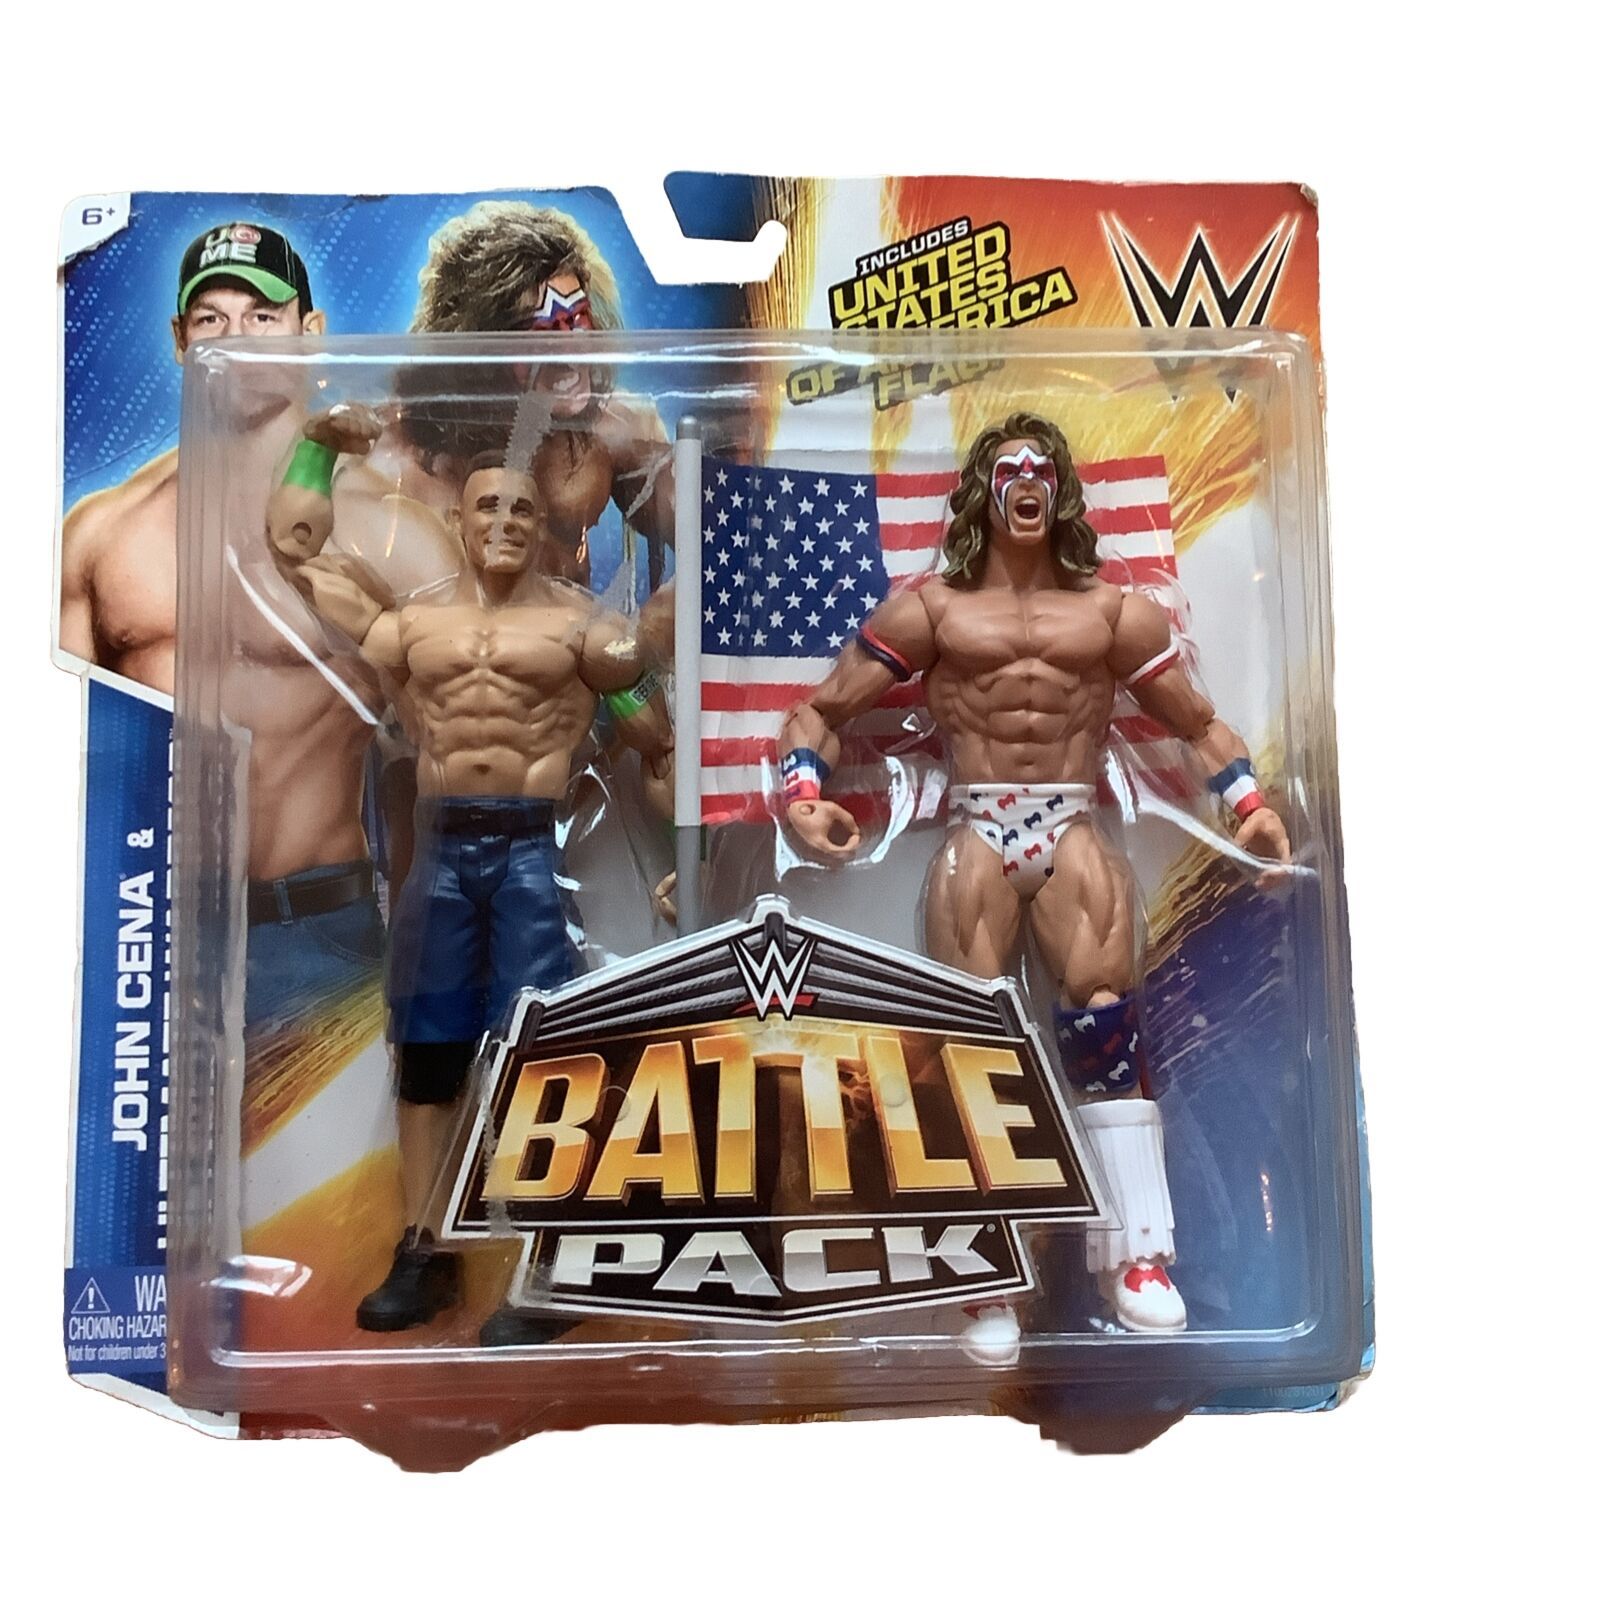 2014 Ultimate Warrior & John Cena WWE Battle Pack w/ American Flag - Mattel - $19.79